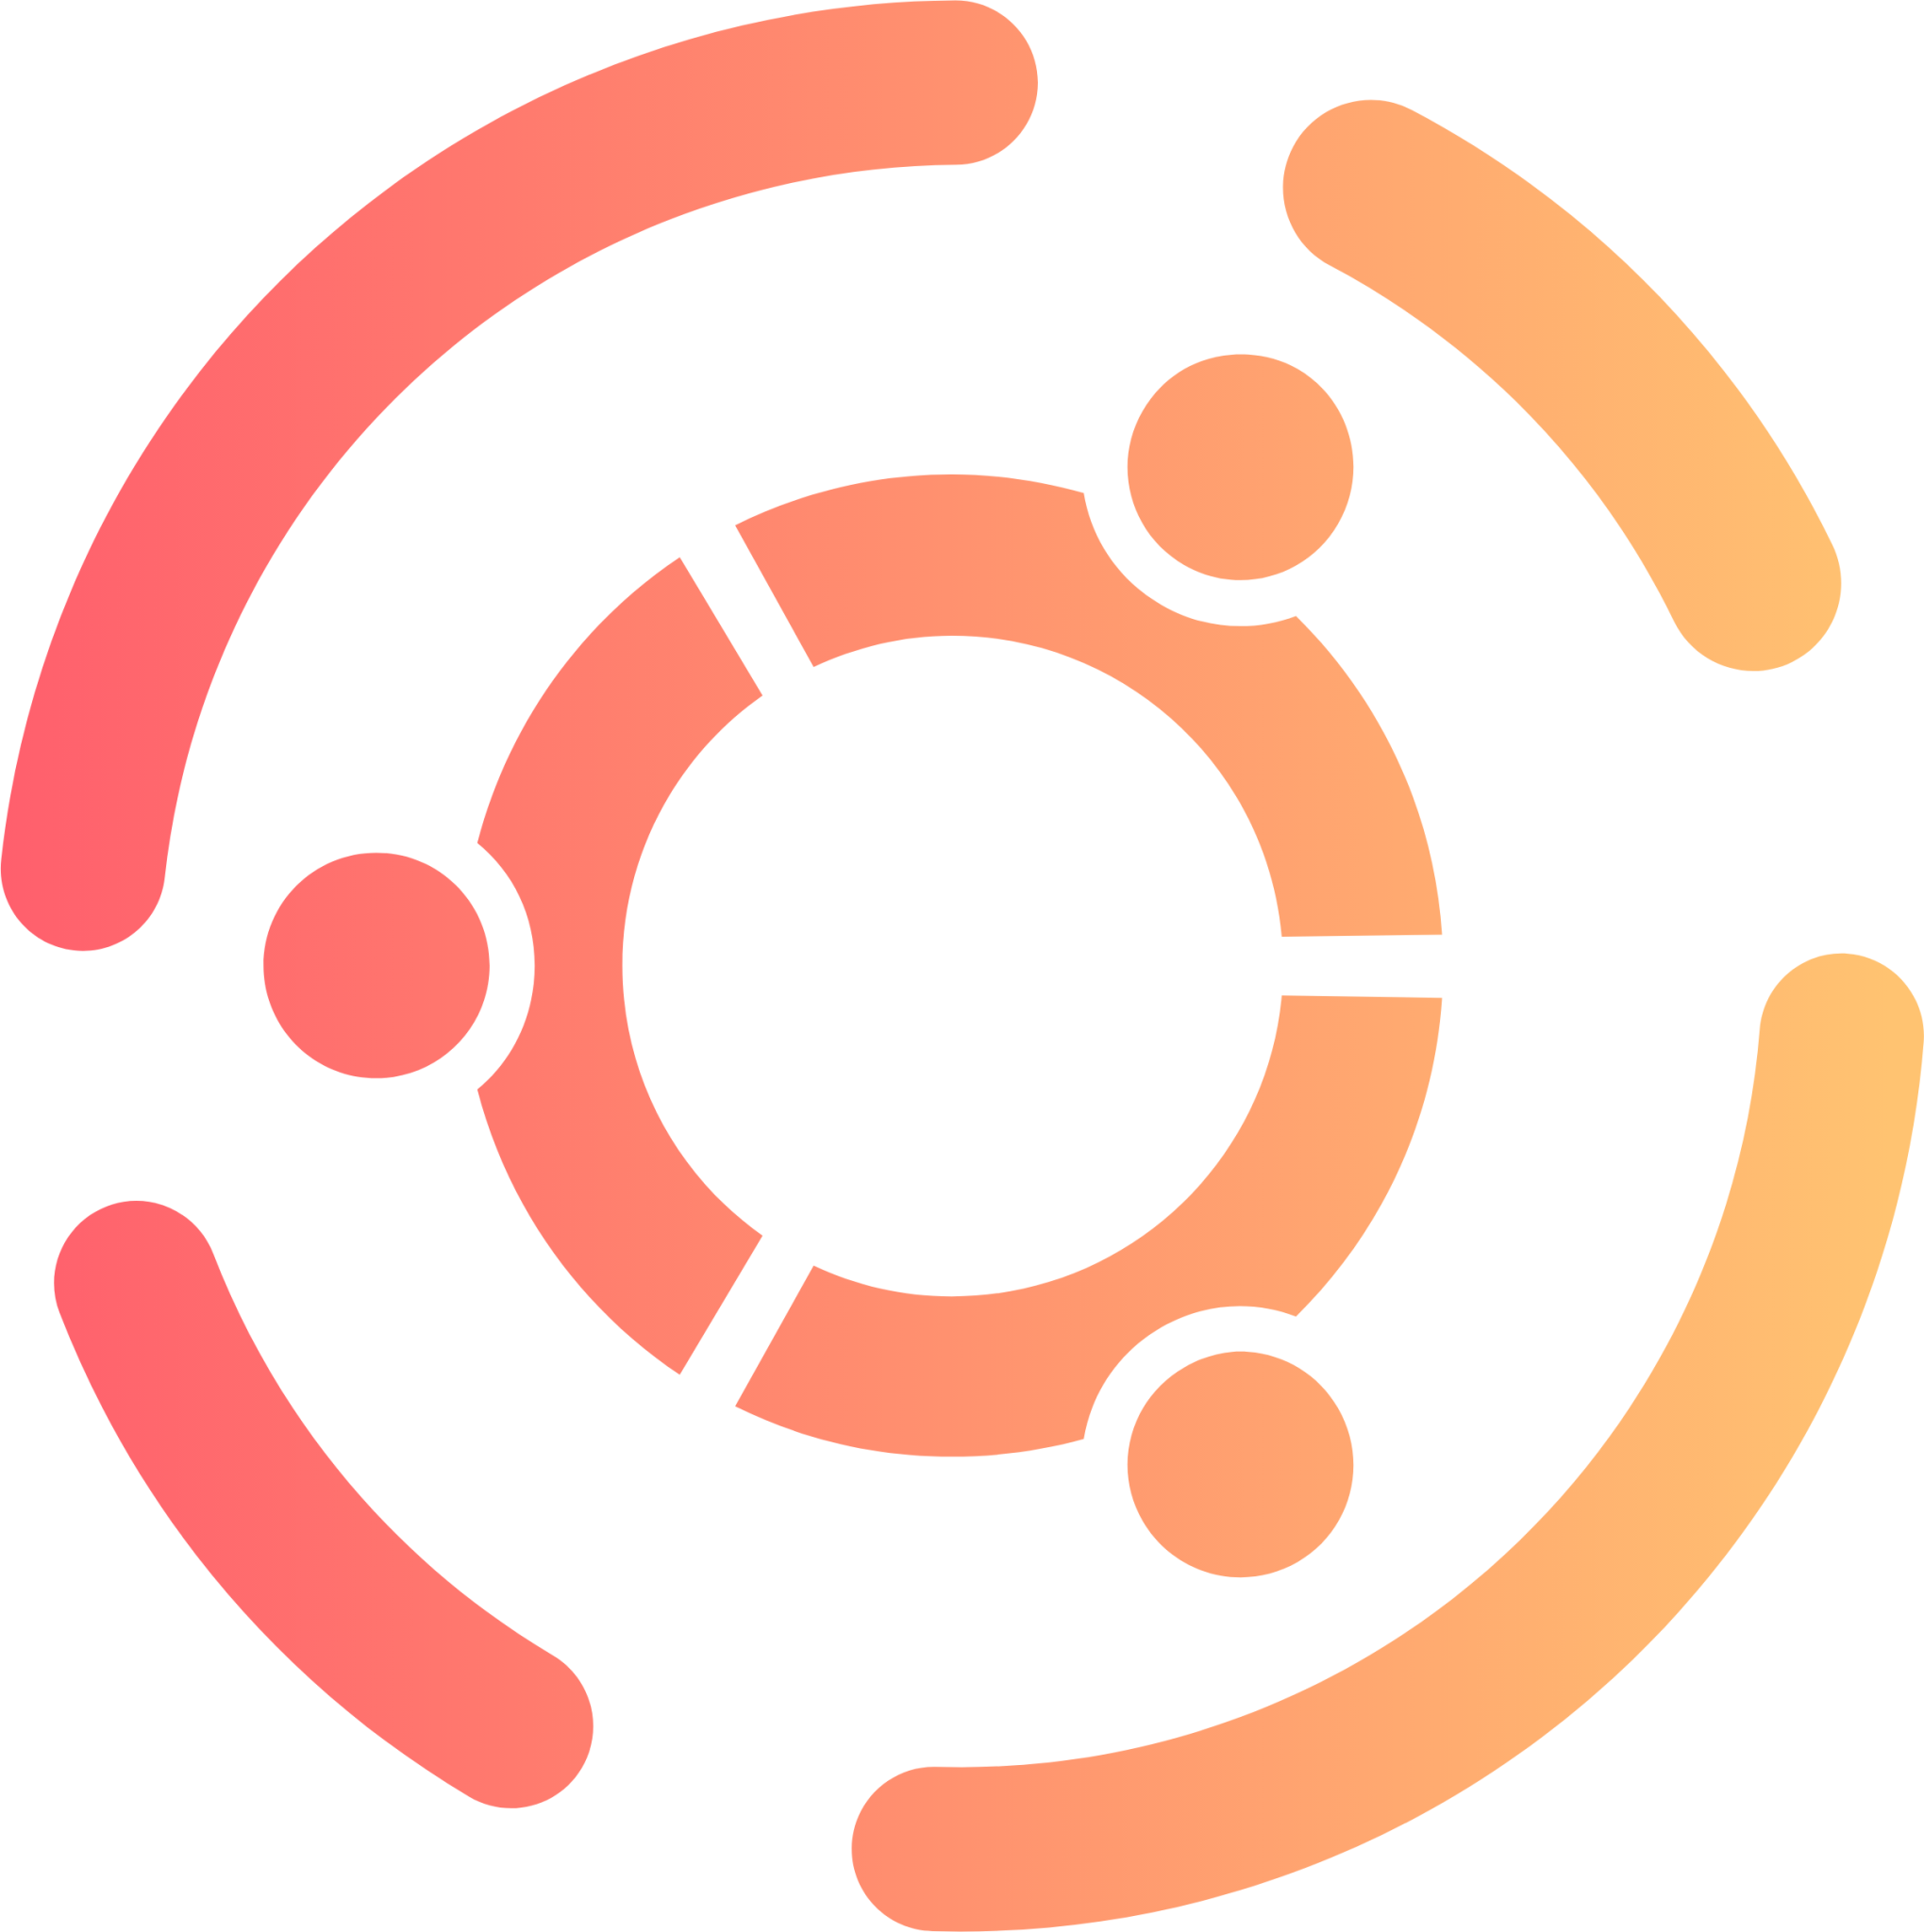 ubuntu Emoji - Download for free – Iconduck